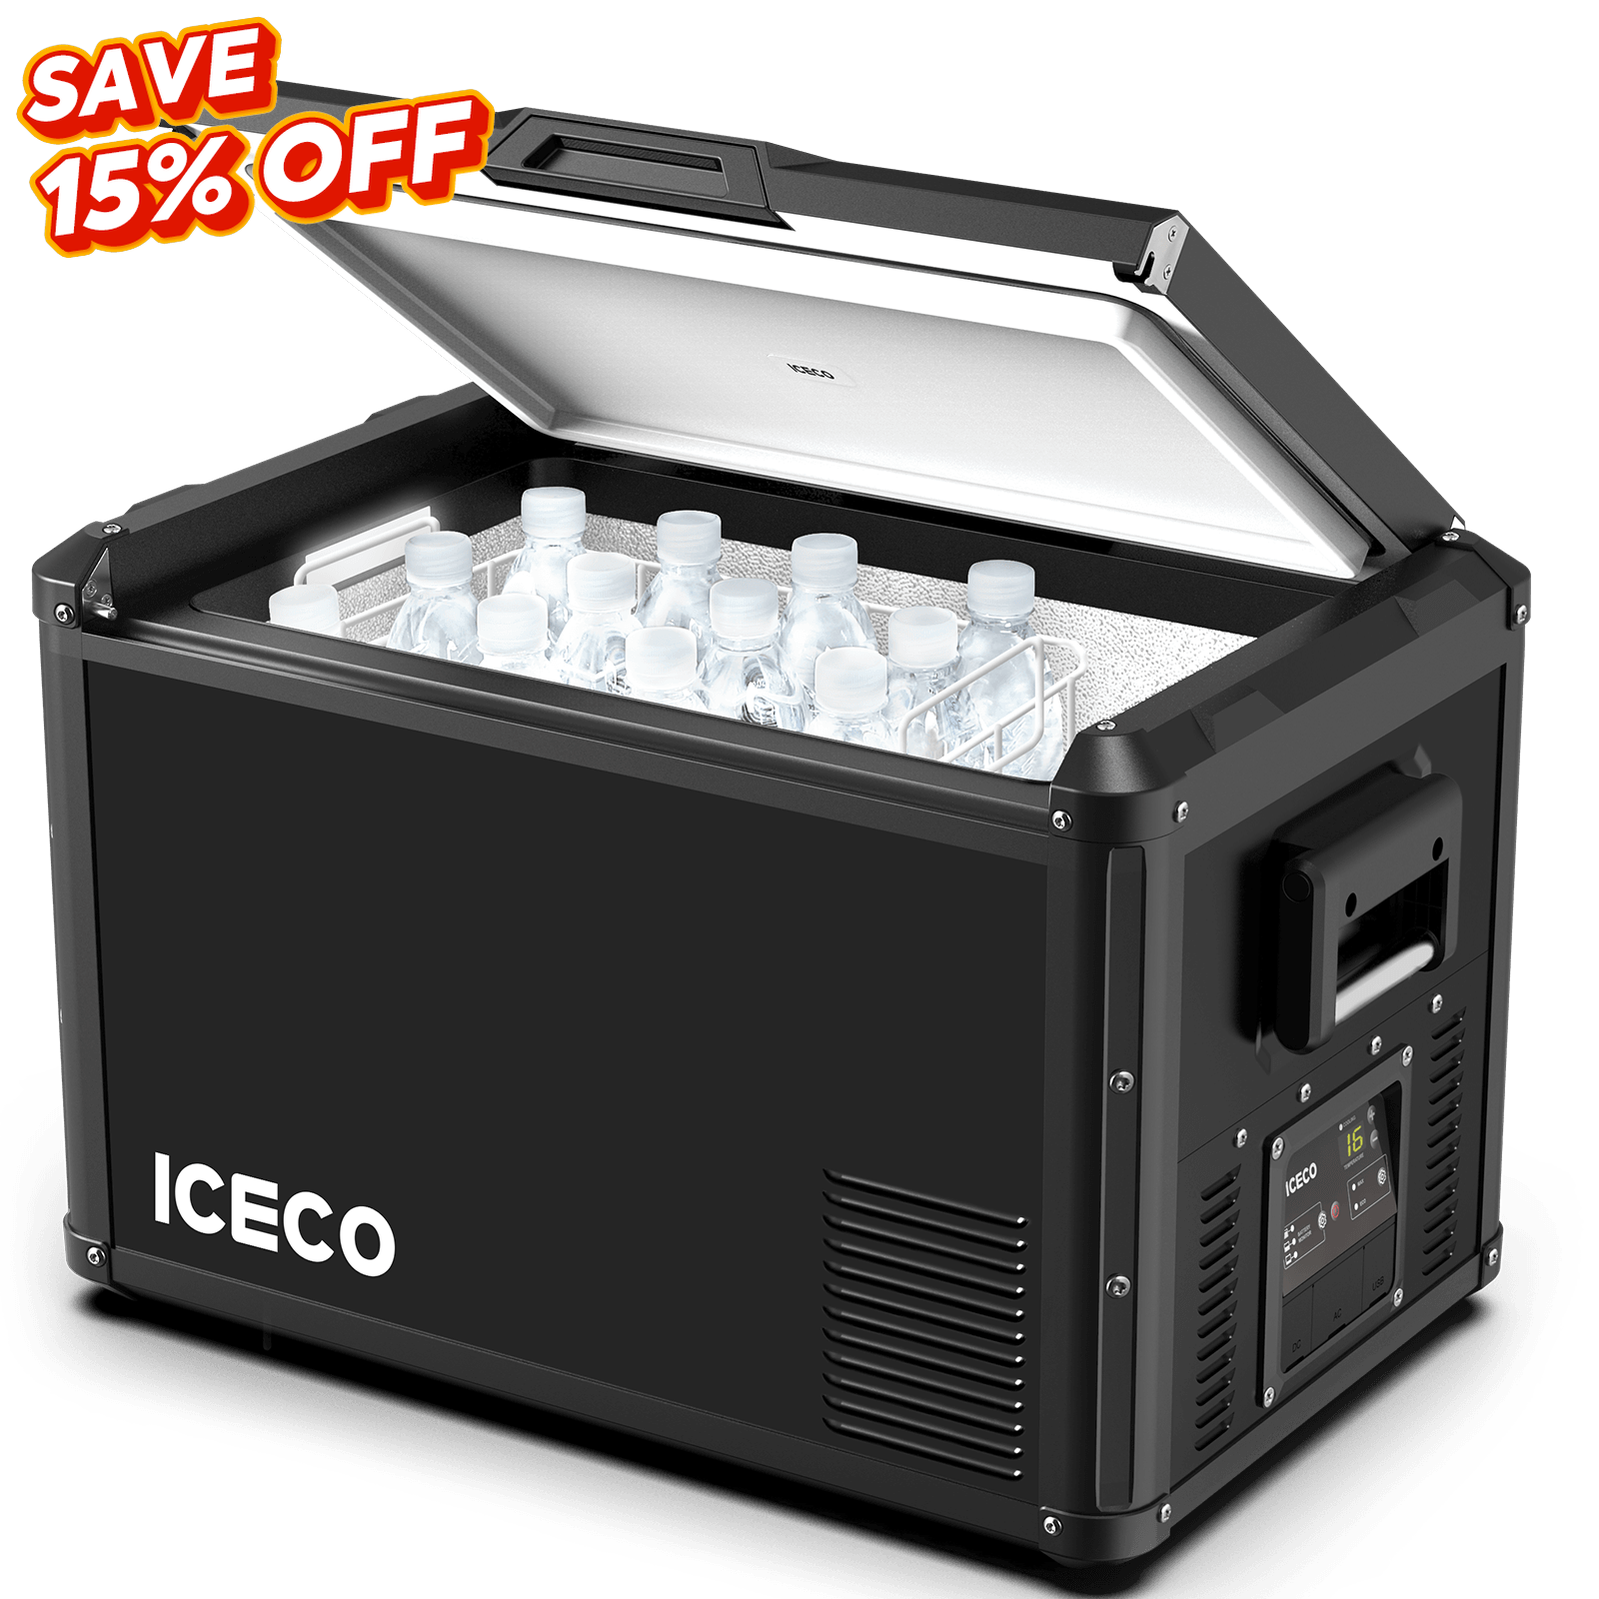 ICECO VL60ProS Single Zone Portable Fridge Freezer Black